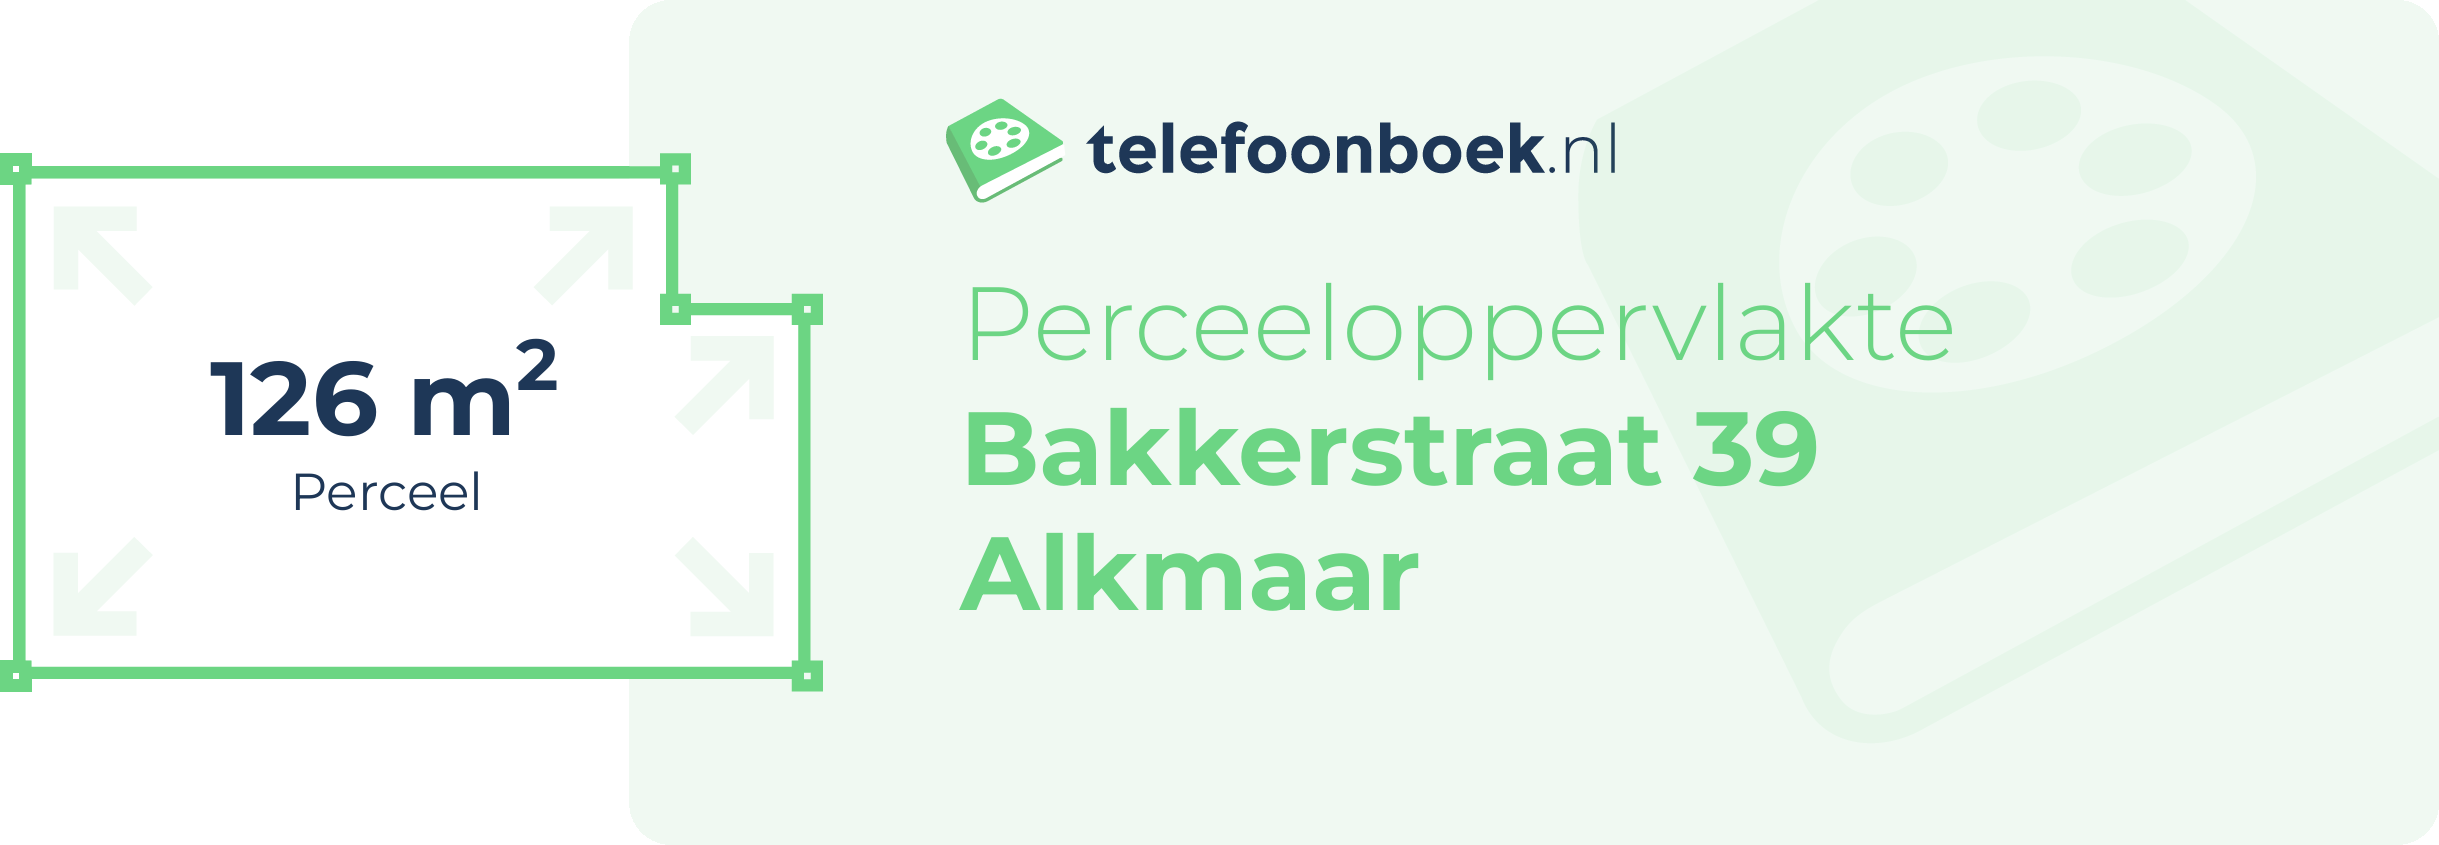 Perceeloppervlakte Bakkerstraat 39 Alkmaar